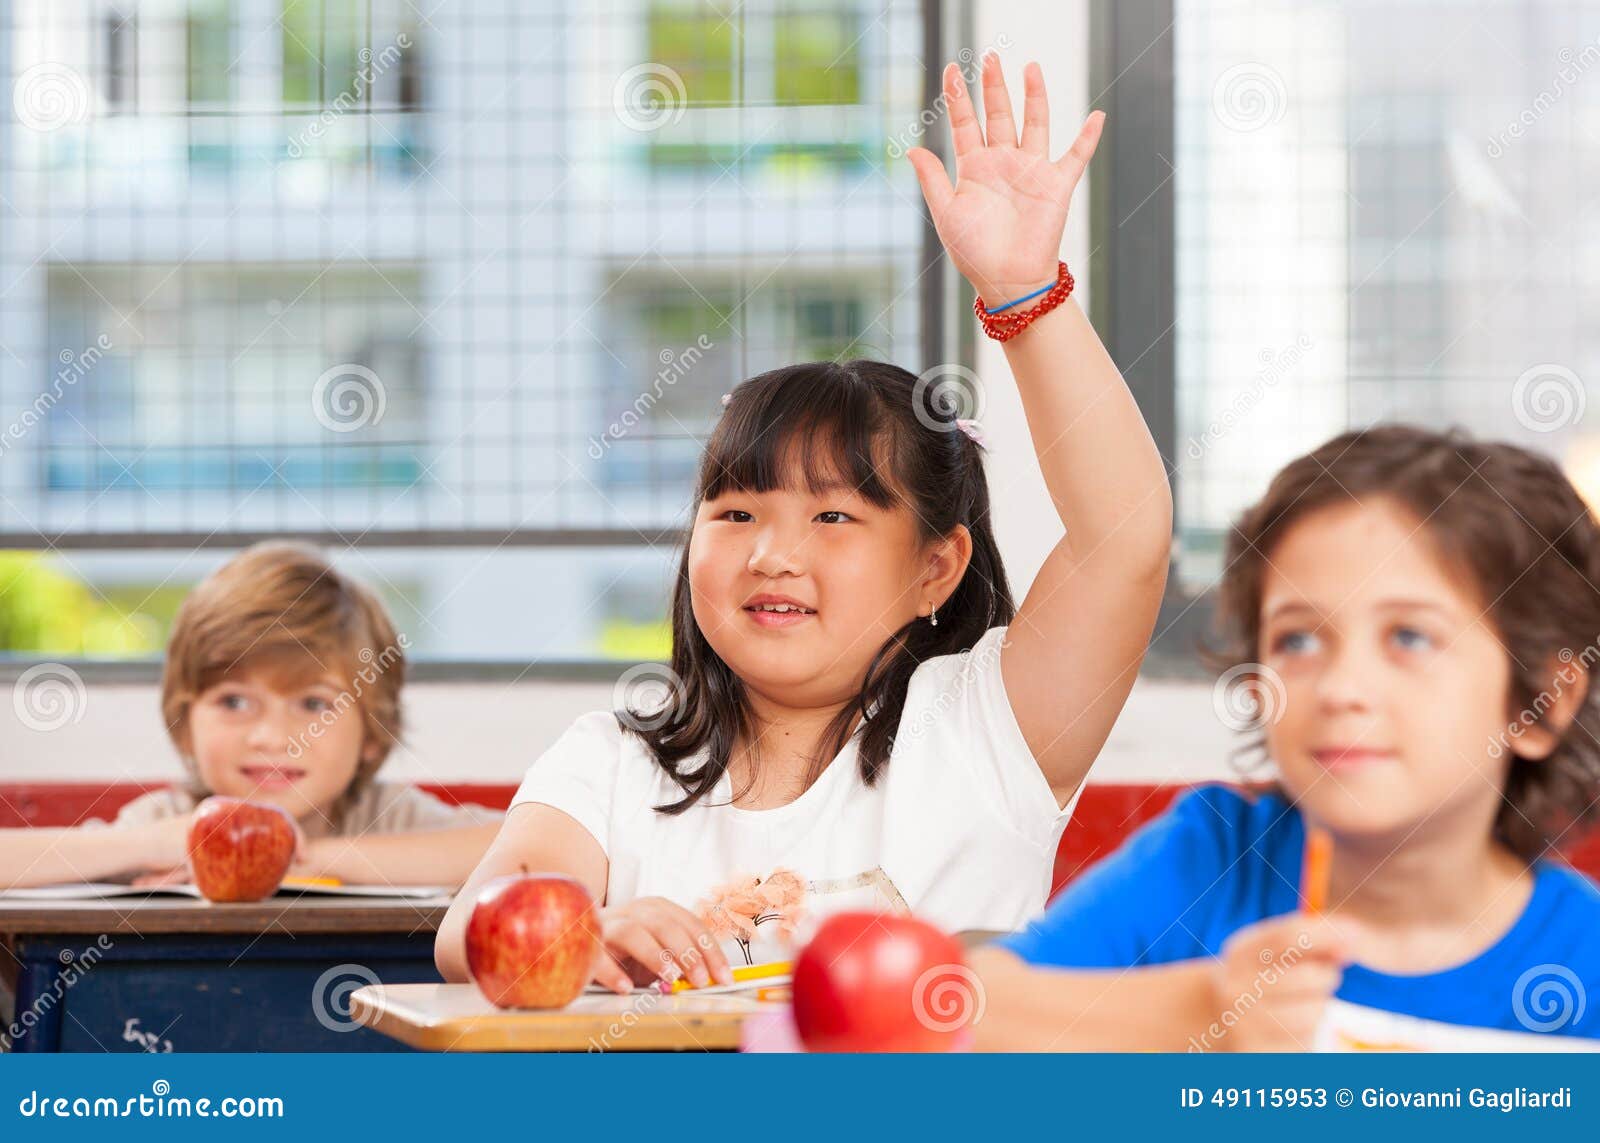 asian girl raising hand in multi ethnic ary classroom